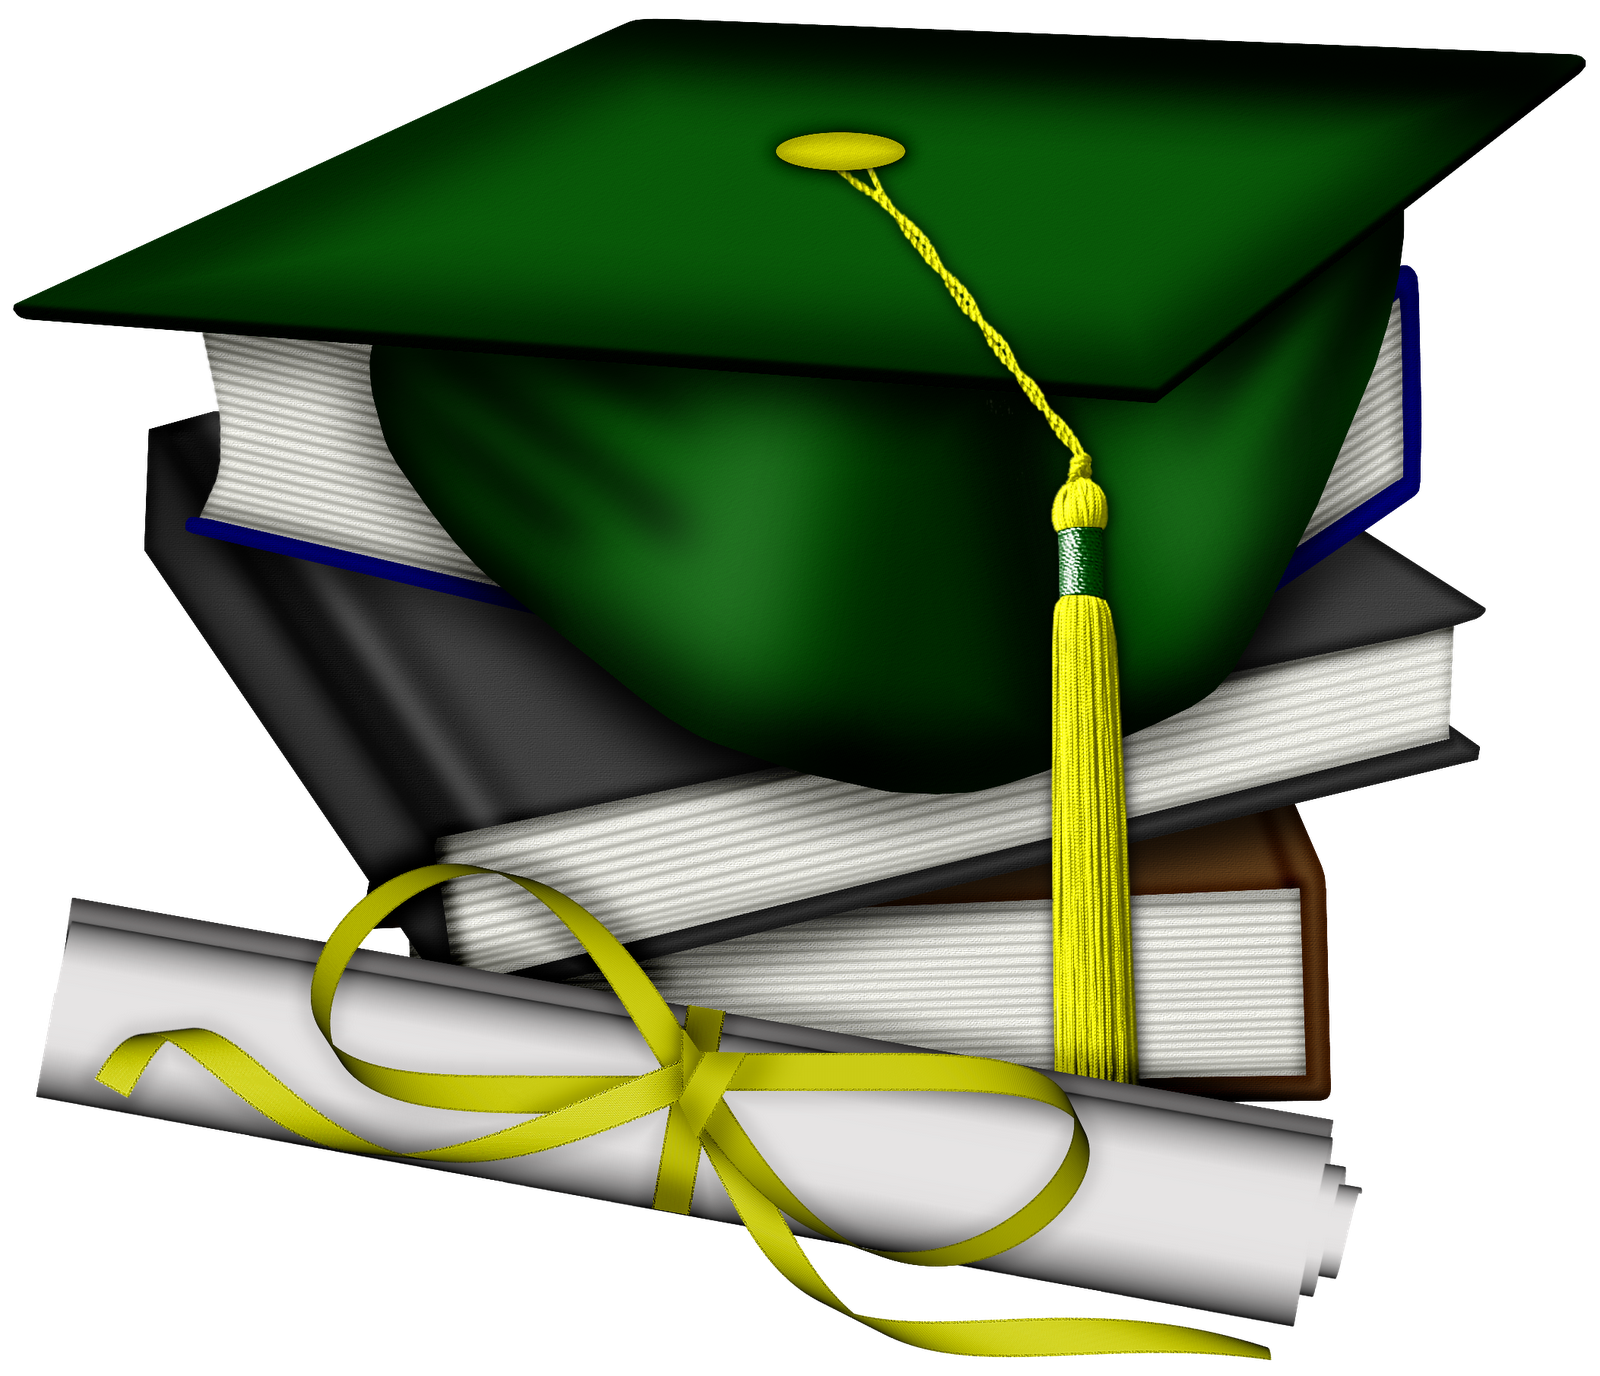 graduation graphics